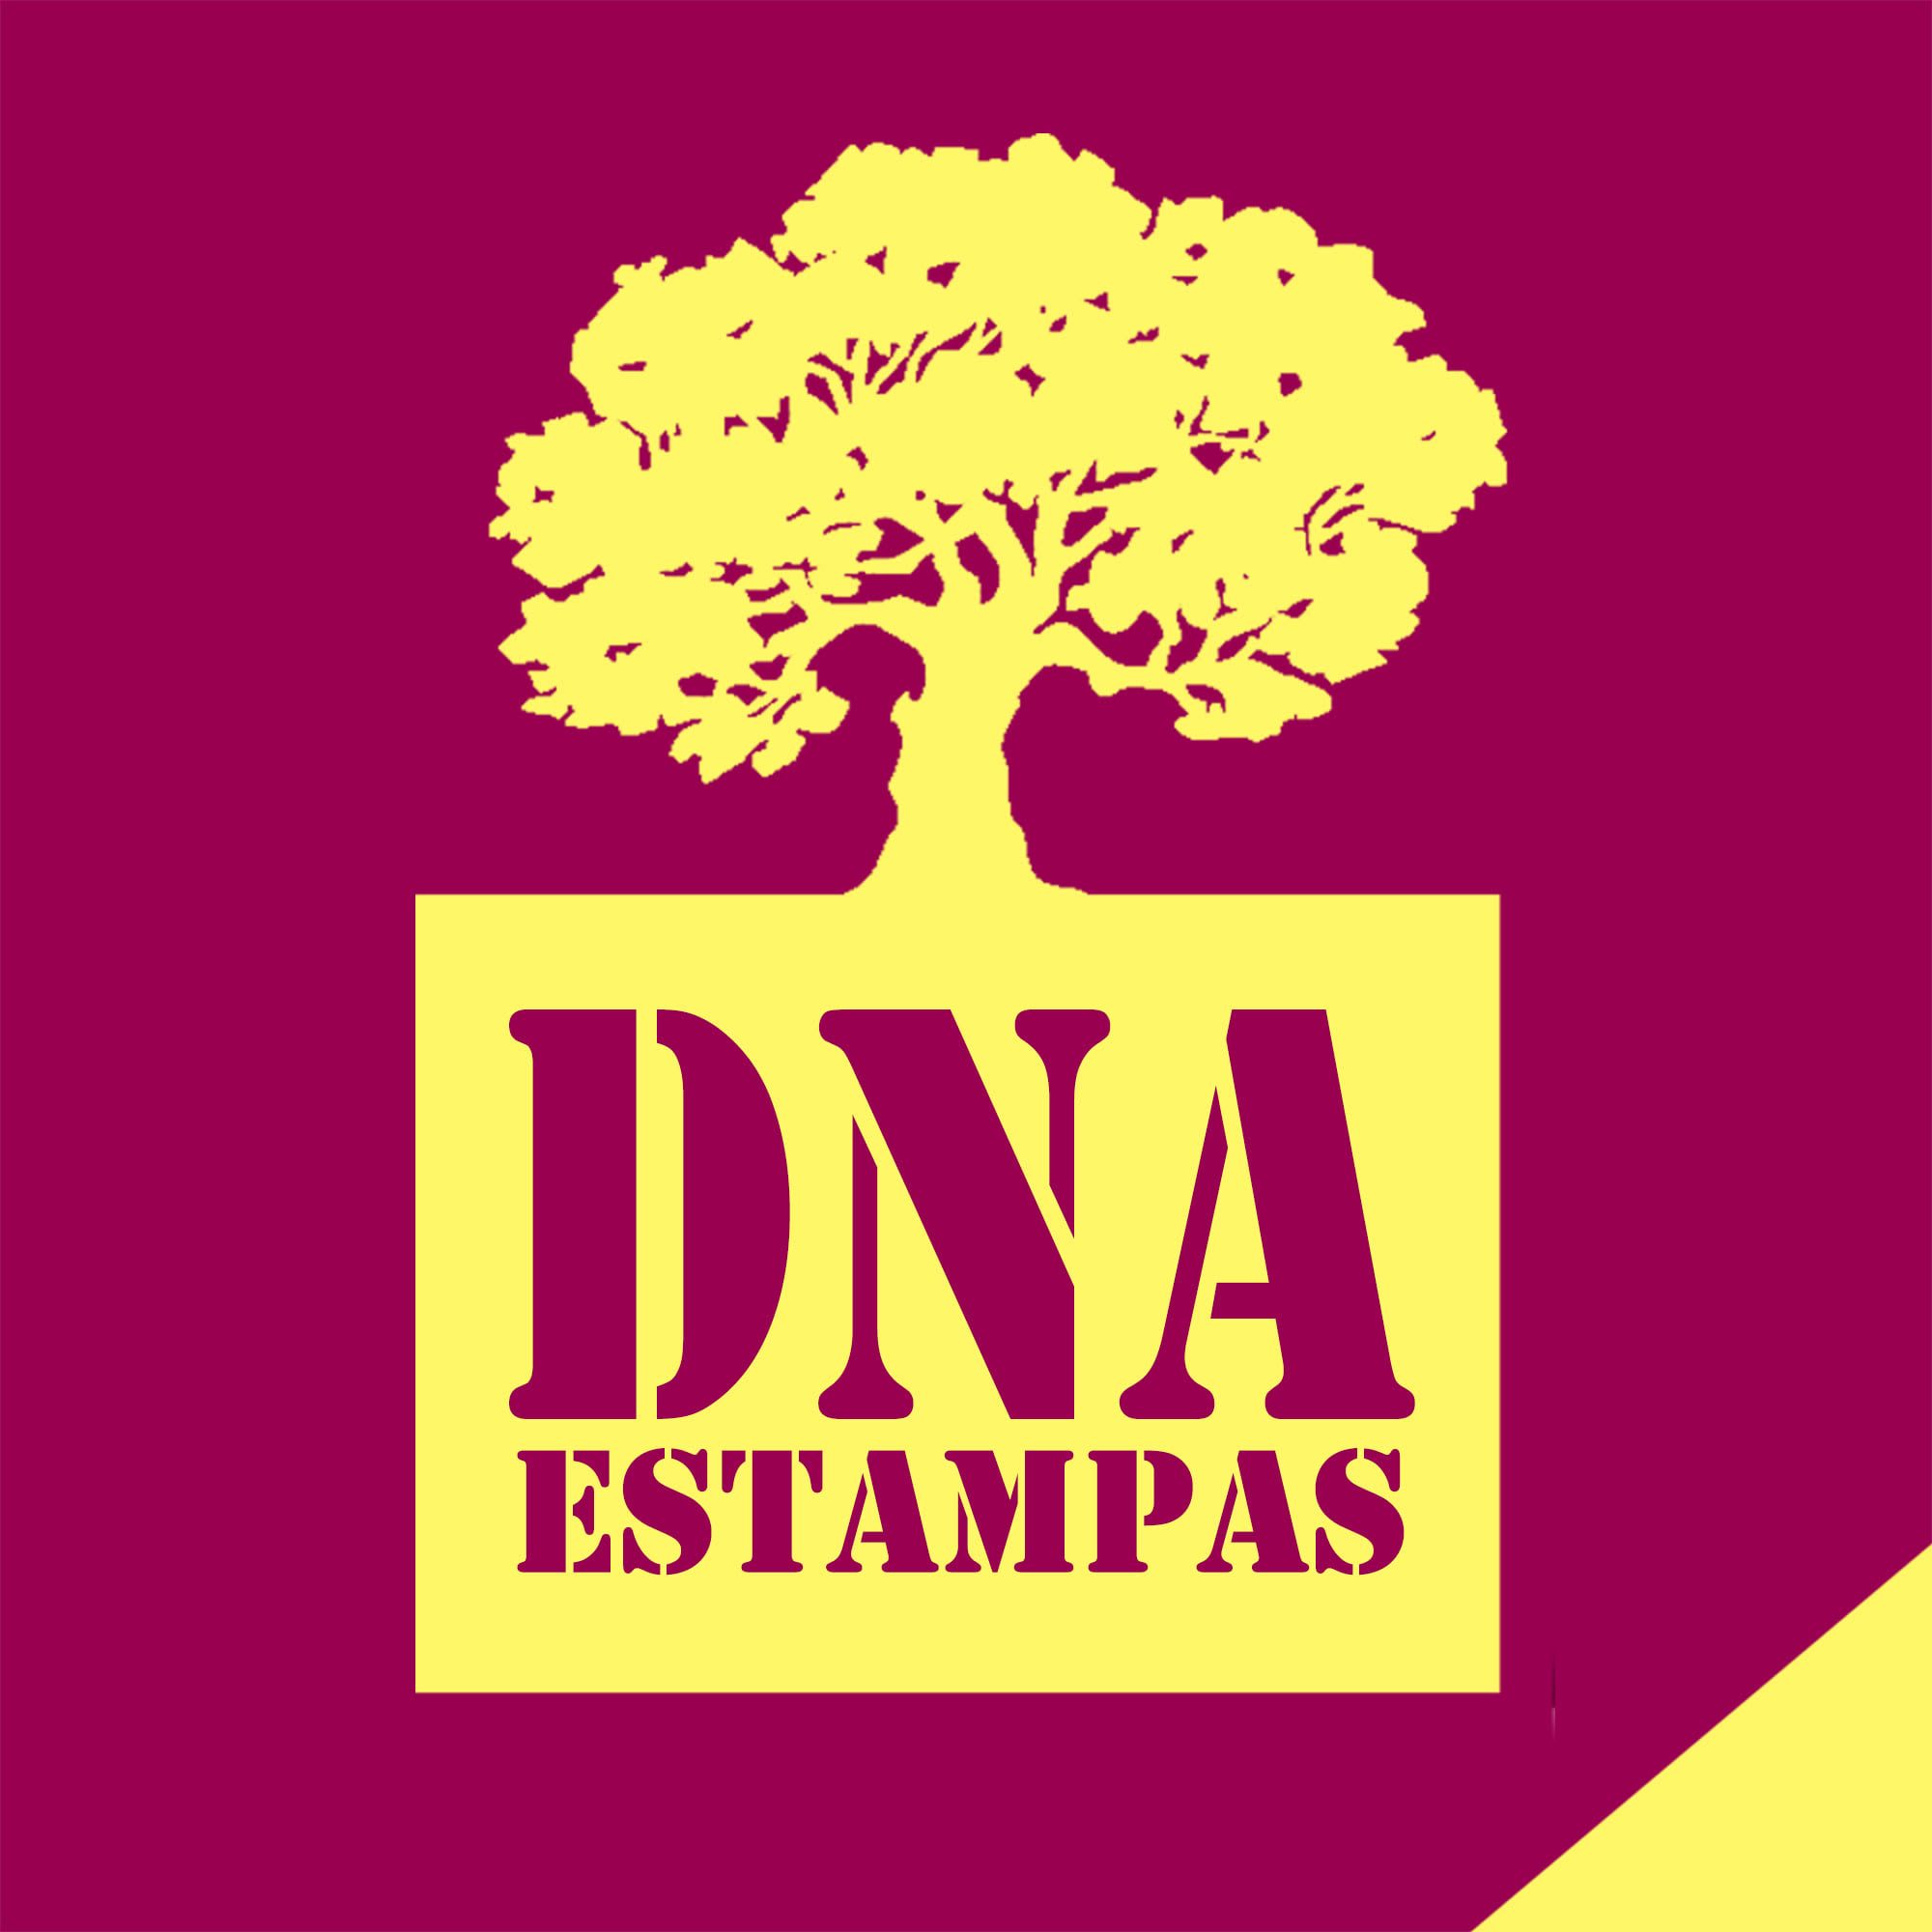 DNA Estampas